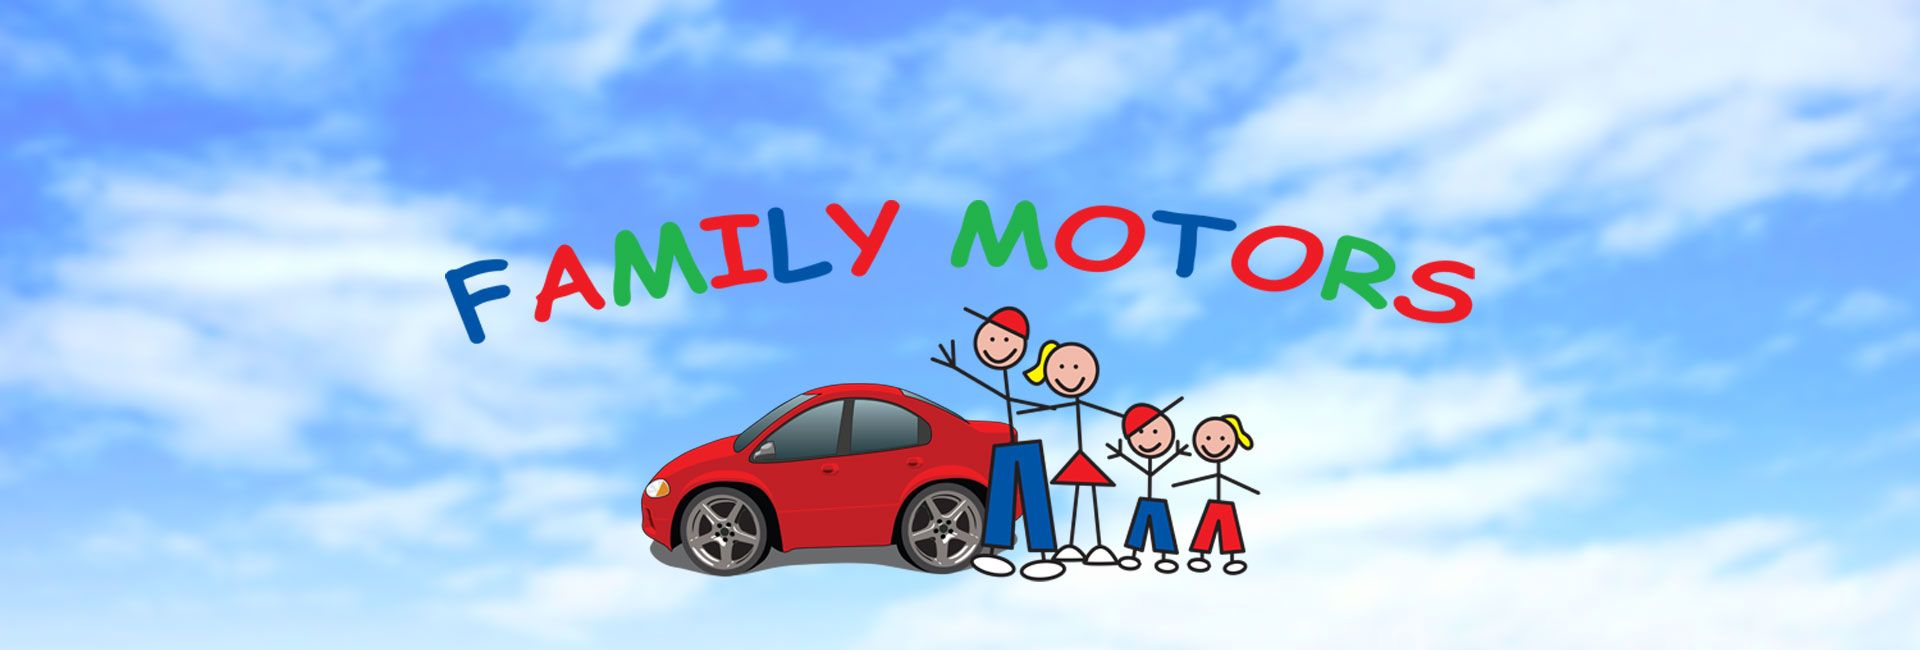 Family Motors Liquidation Sale